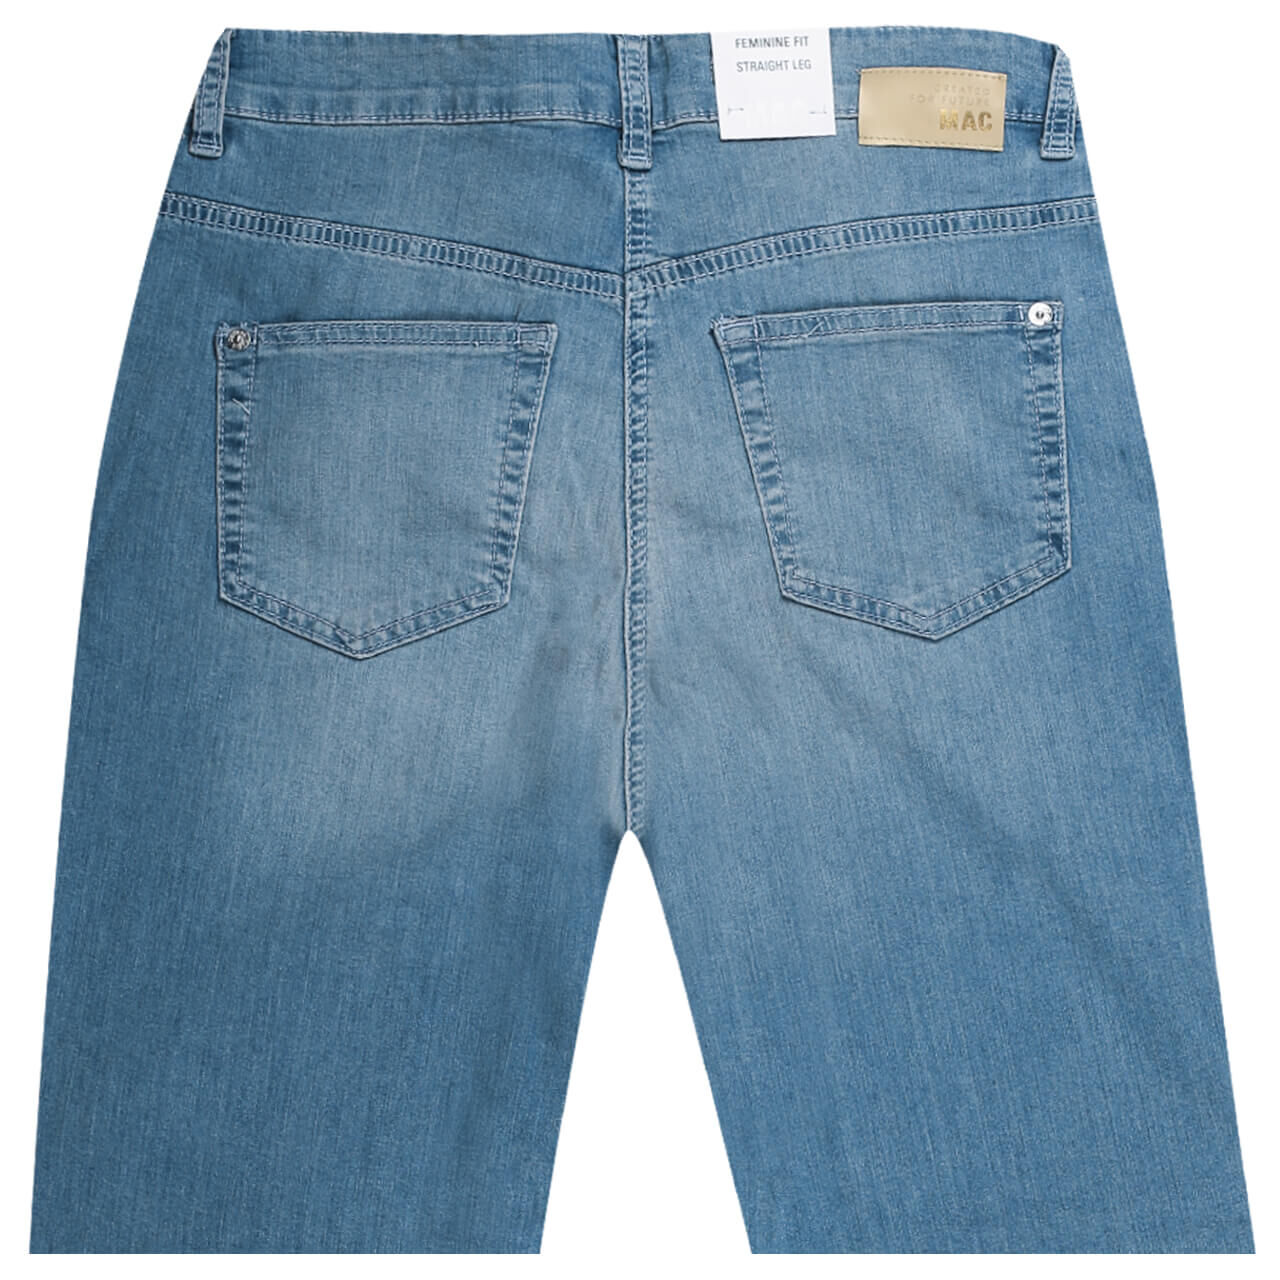 MAC Jeans Stella für Damen in Hellblau, FarbNr.: D499